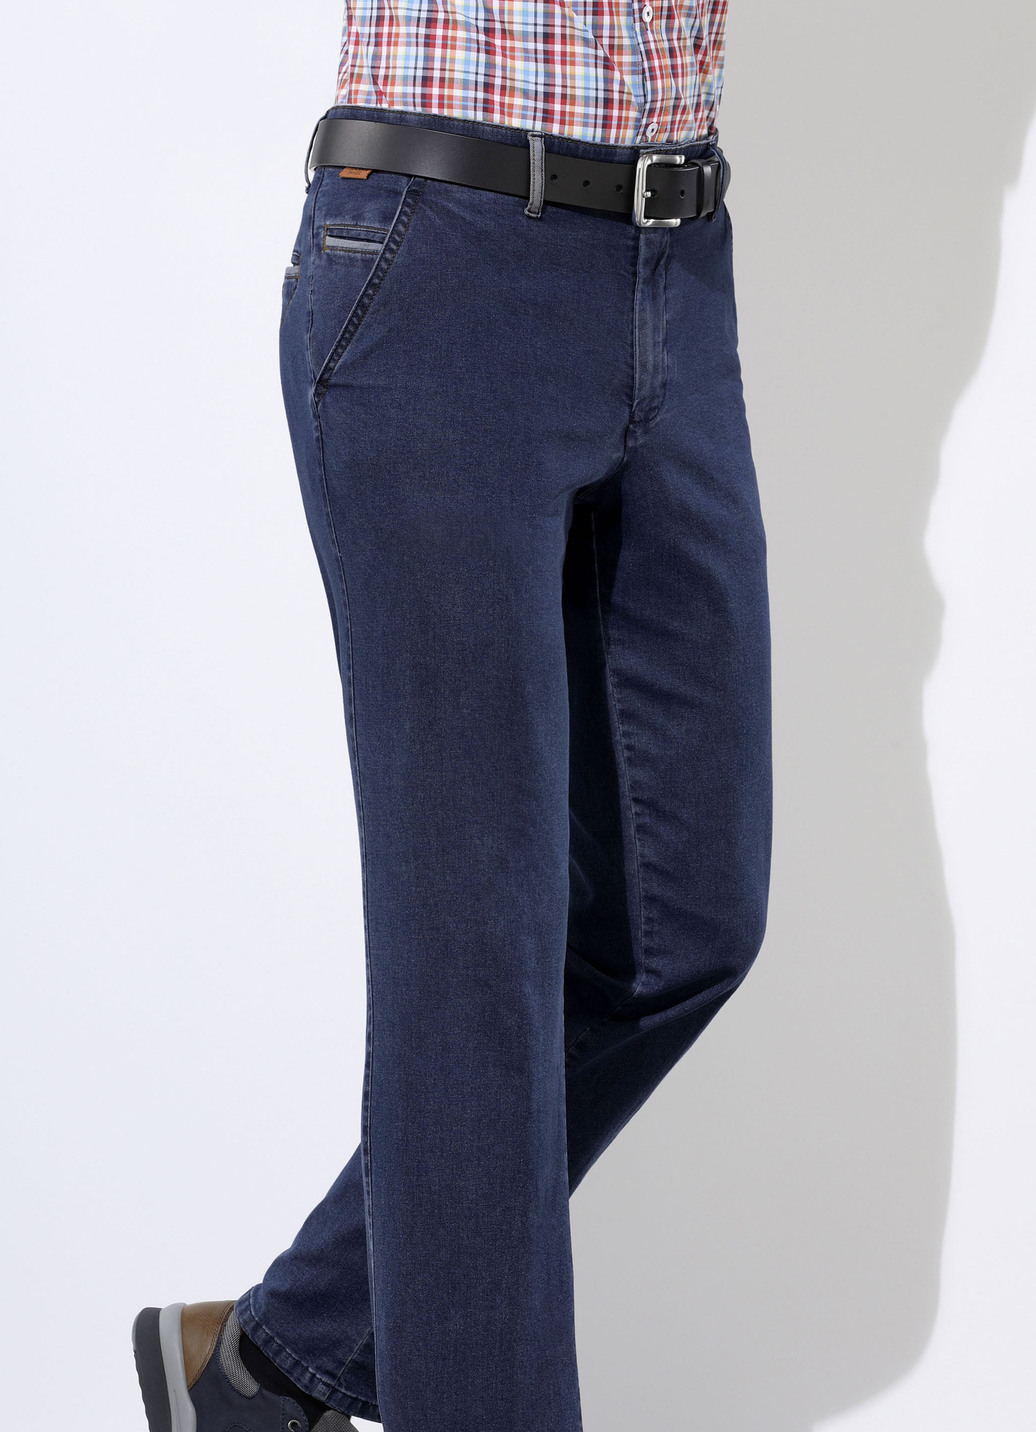 "Francesco Botti"-Jeans in 3 Farben, Dunkelblau, Größe 24 von FRANCESCO BOTTI